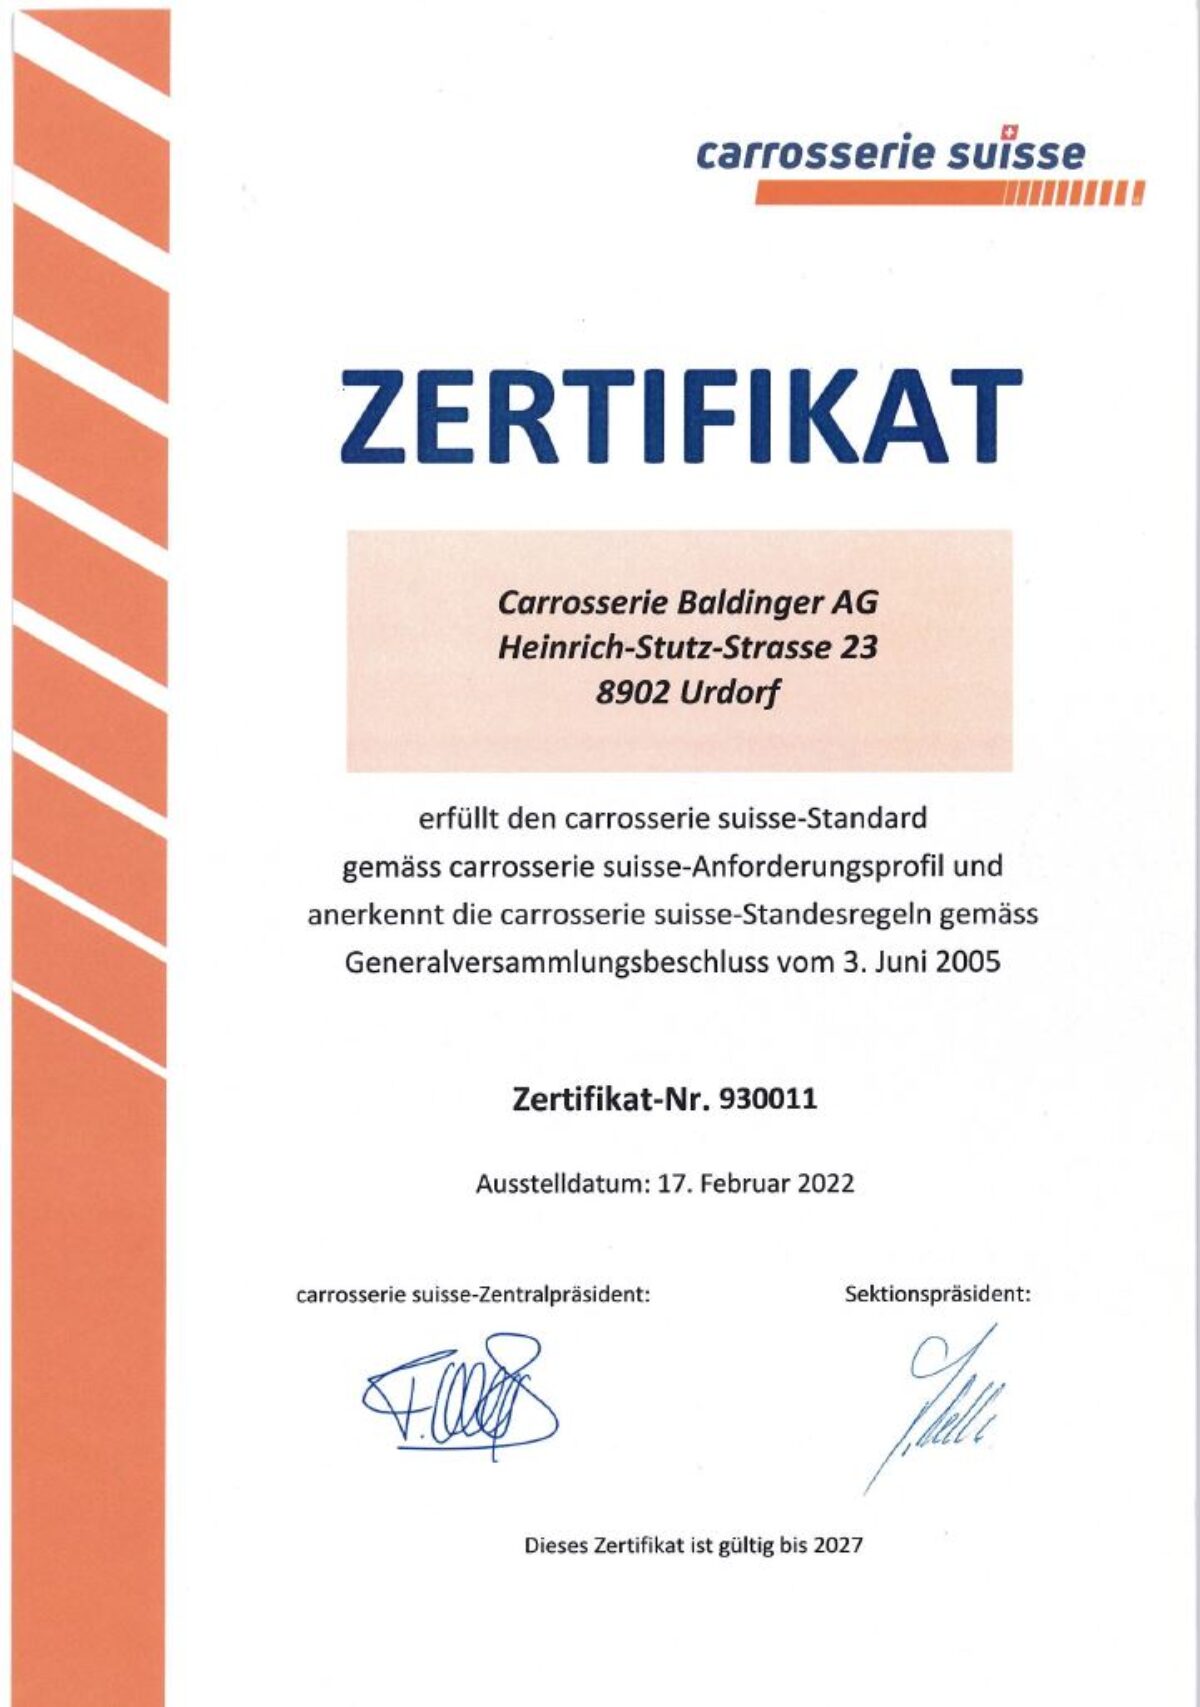 Zertifikate: Carrosserie Suisse der Fahrzeugbau & Carrosserie Baldinger AG Urdorf